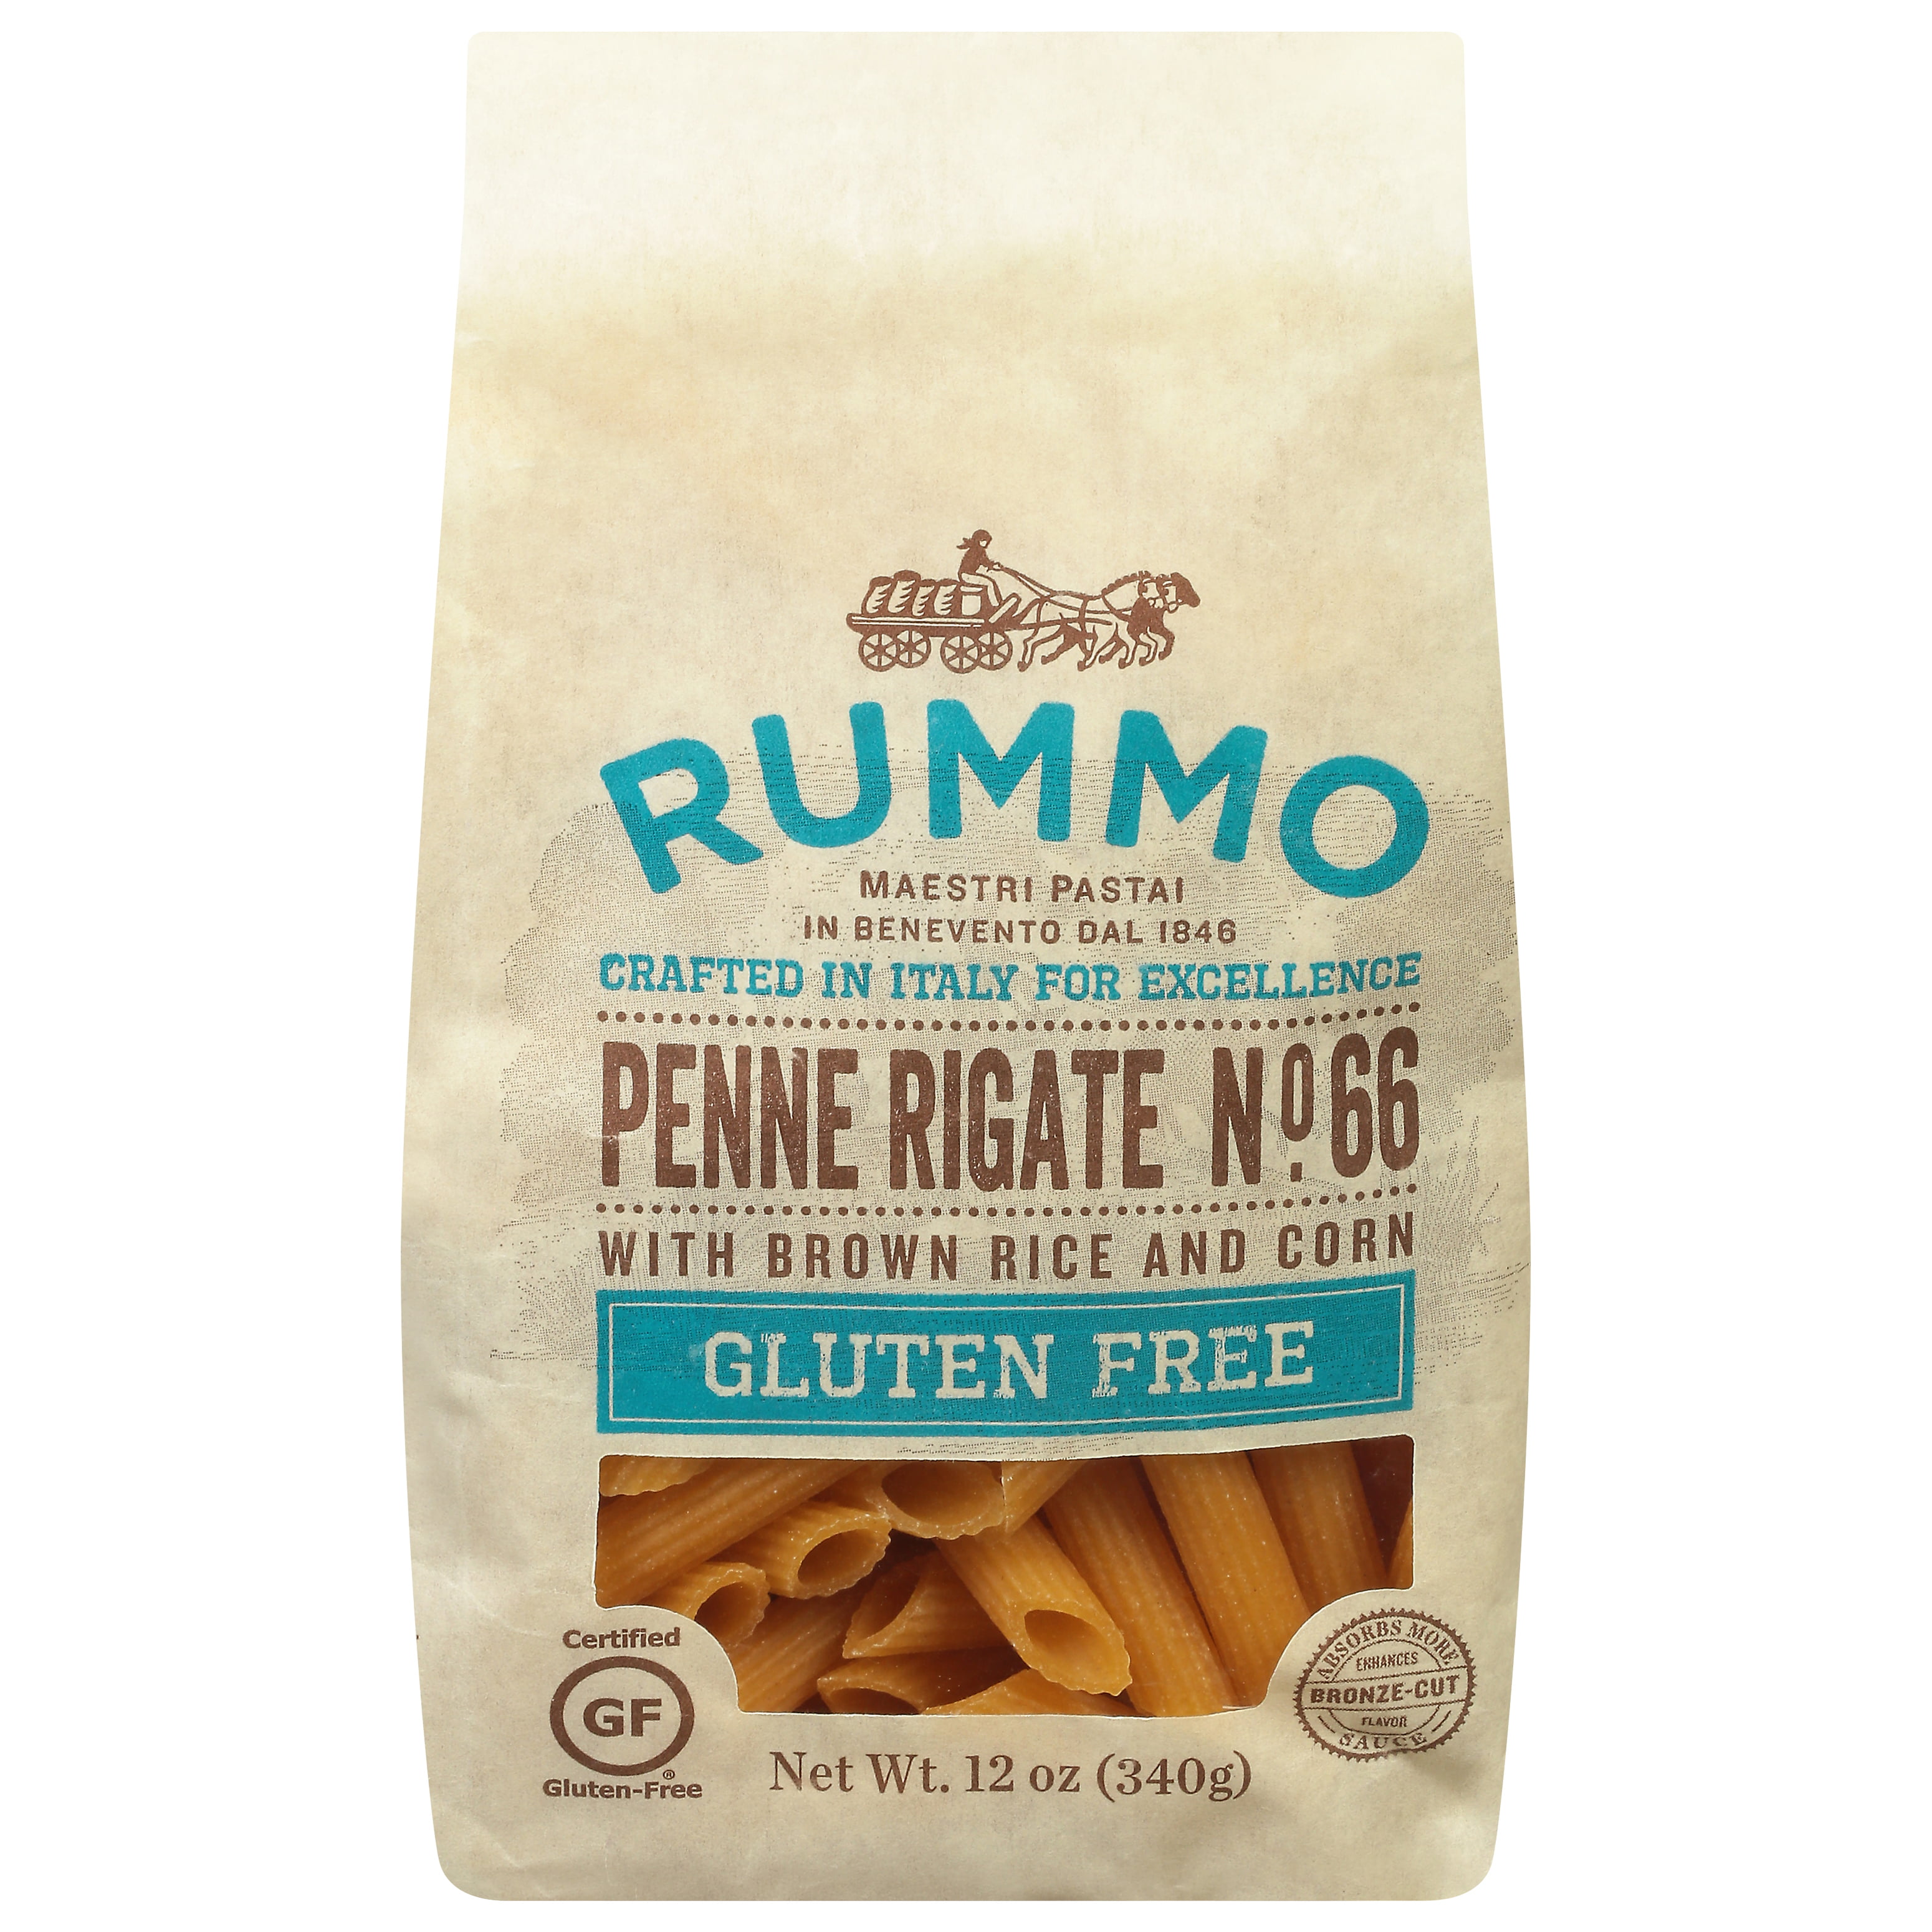 Buy Potato Gnocchi Pasta Rummo online